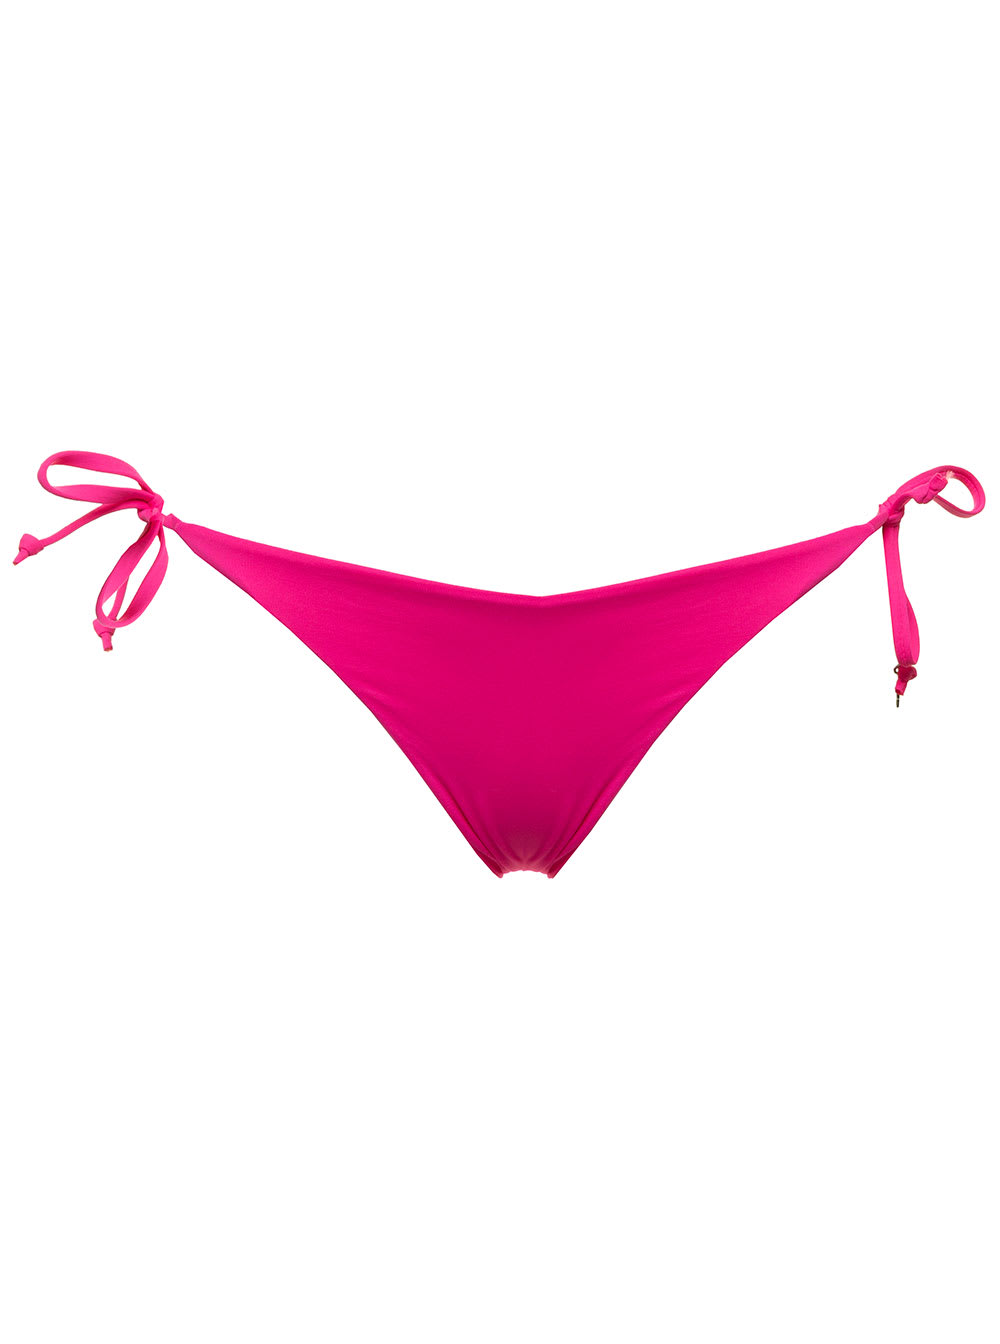 Fisico - Cristina Ferrari Fisico Womans Pink Stretch Fabric Bikini Bottom With Logo